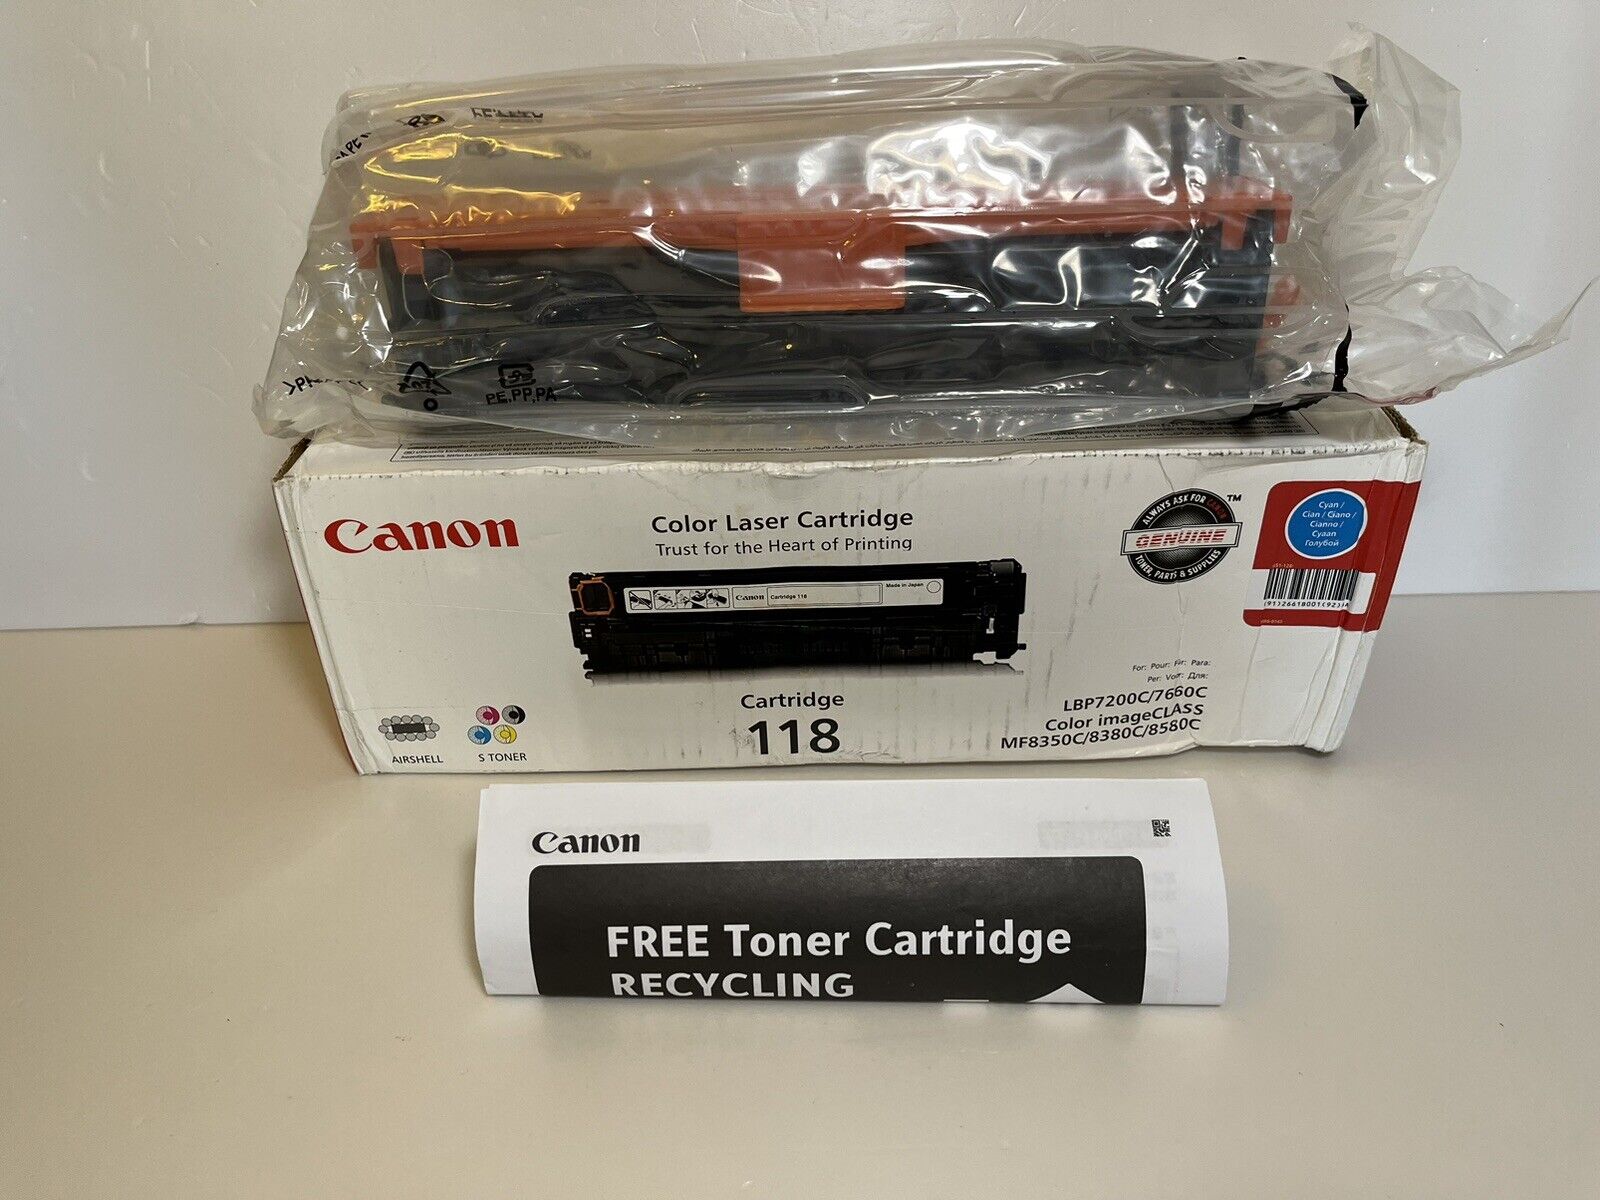 Genuine Canon 118 CYAN Toner Cartridge for LBP7200C/7660C - Open Box